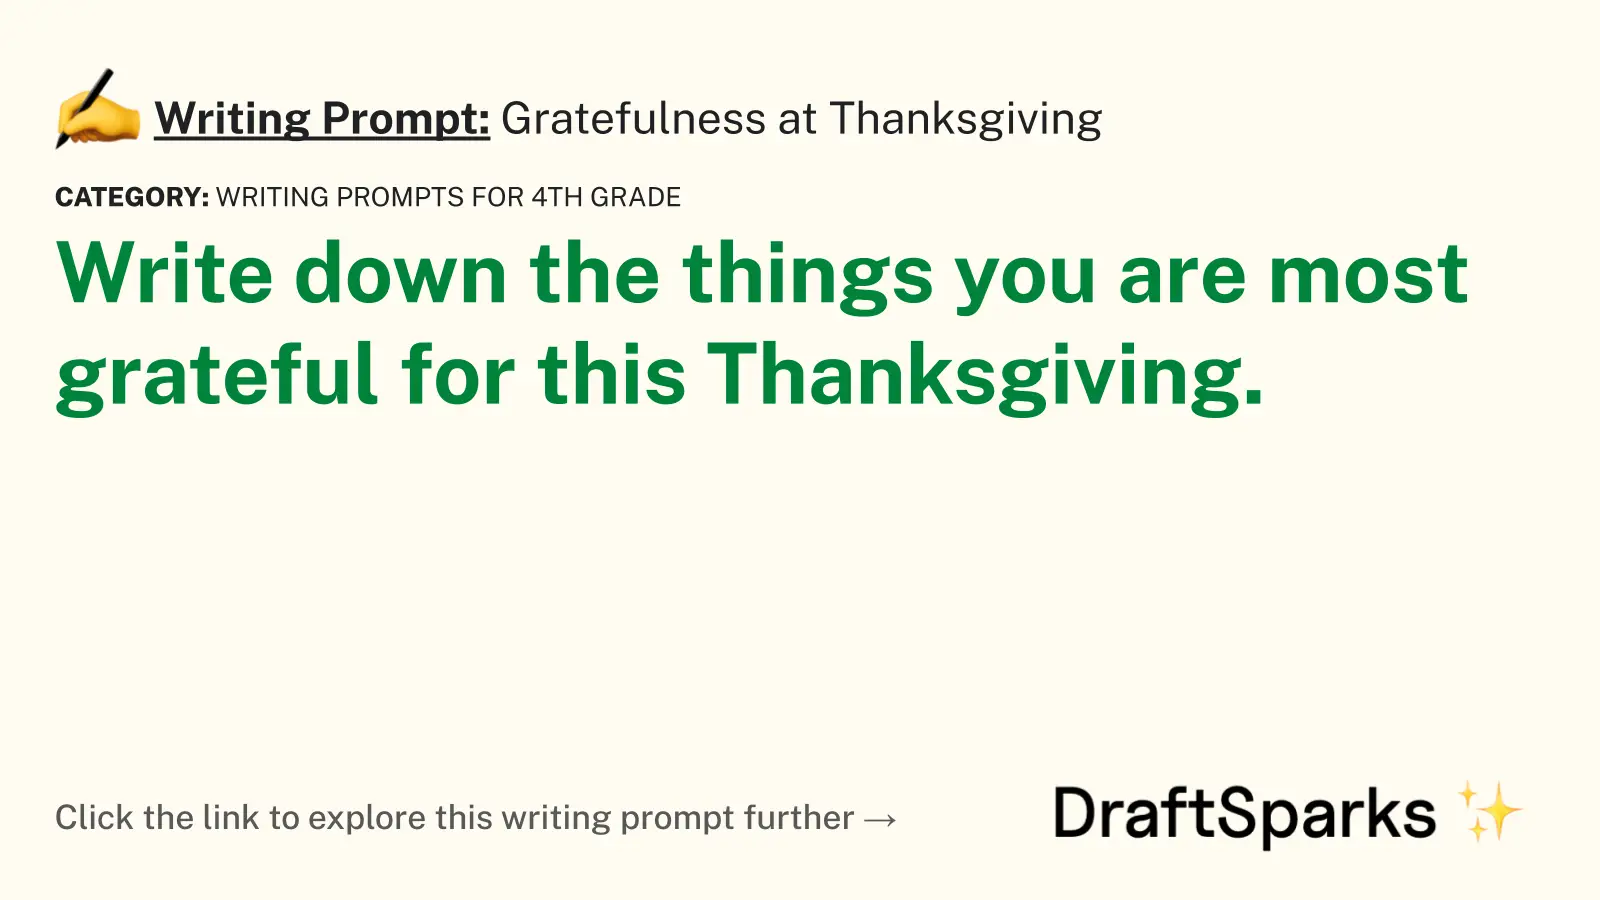 Gratefulness at Thanksgiving